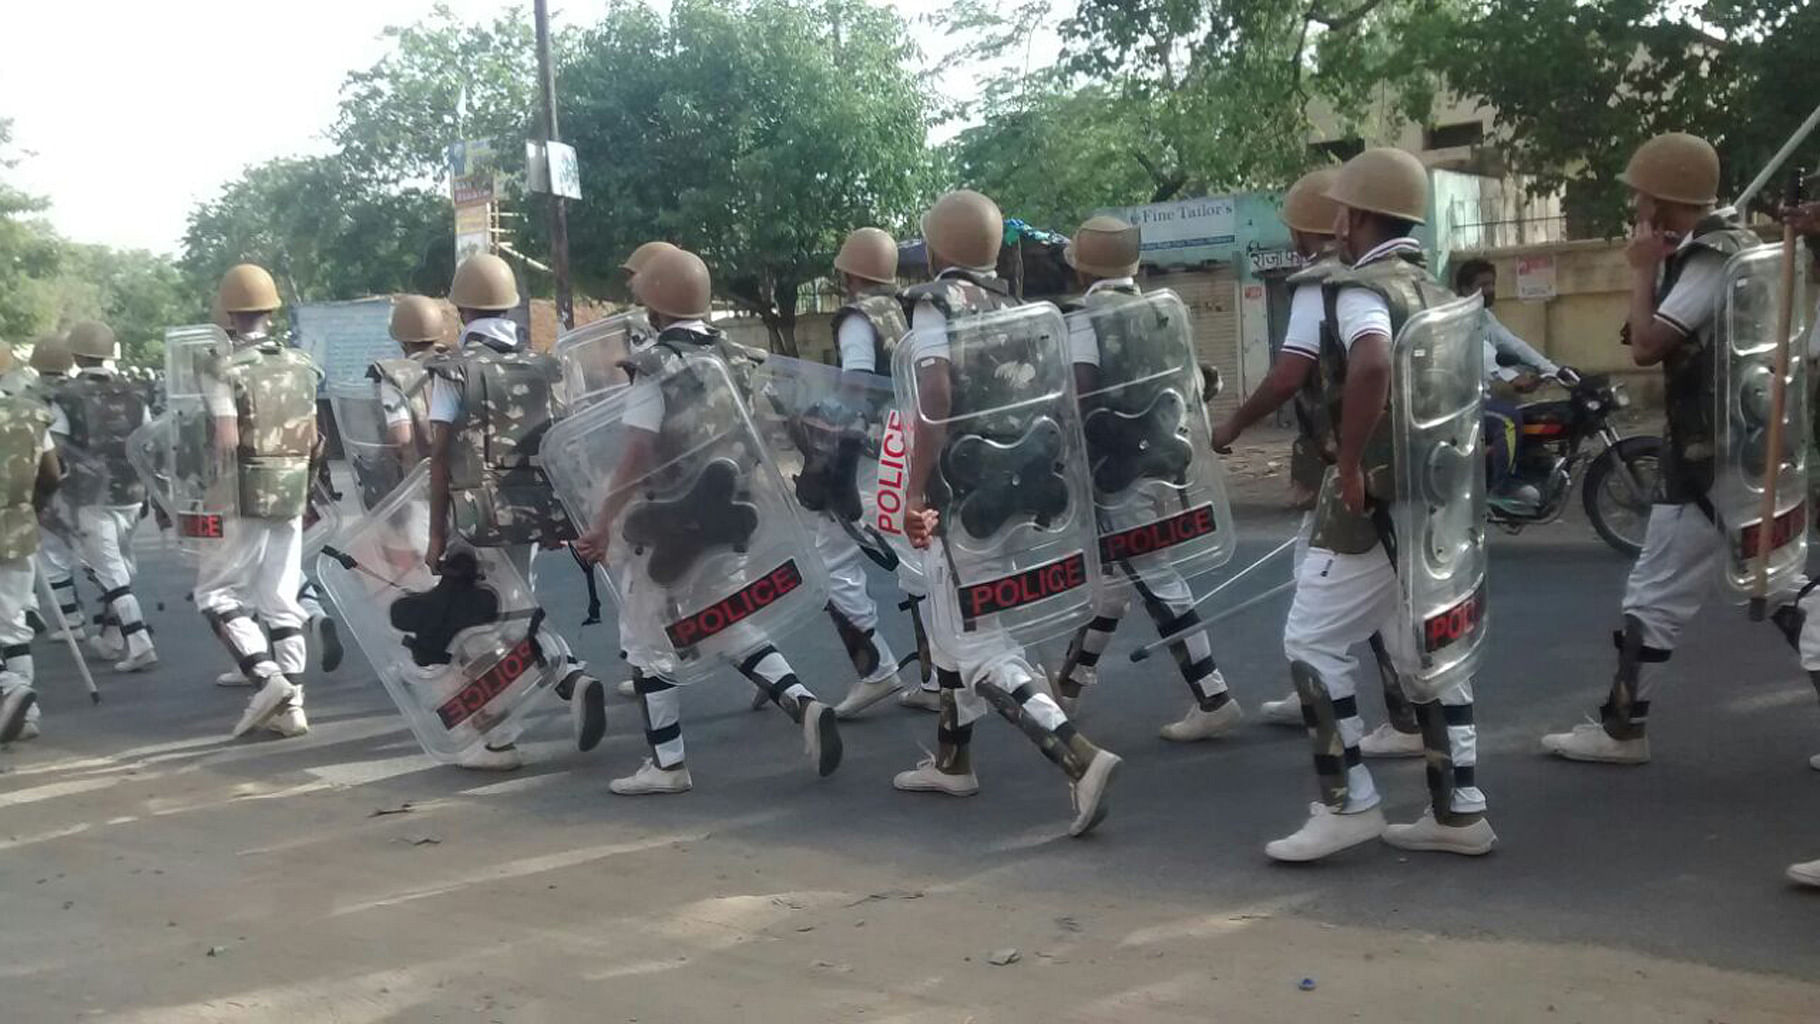 Police forces deployed in Mathura following the clash on Thursday. (Photo Courtesy: Brajesh Kumar)